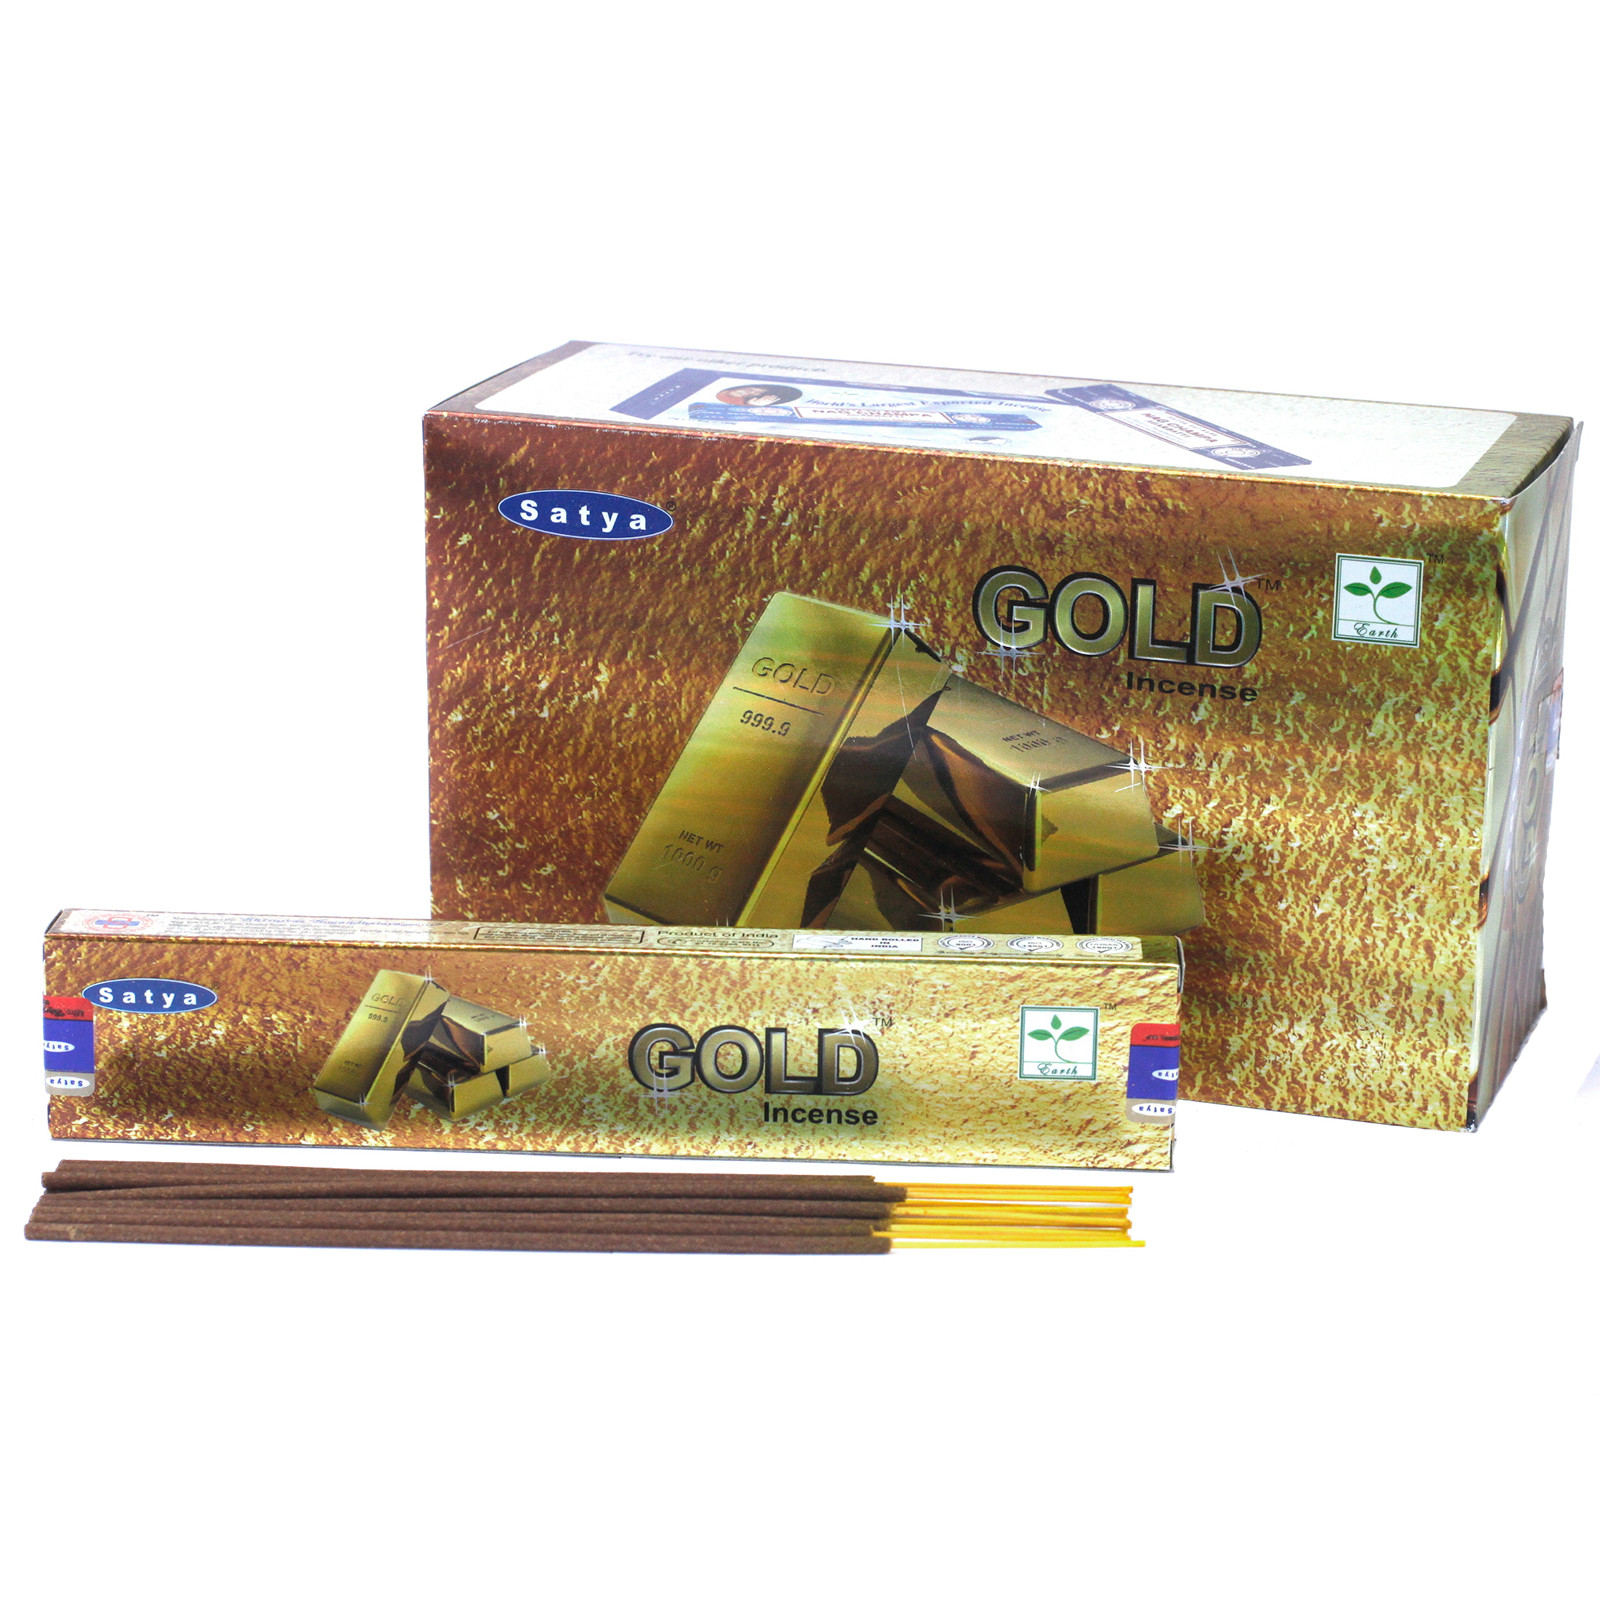 3 x 15g Packs Satya Incense Sticks - Gold